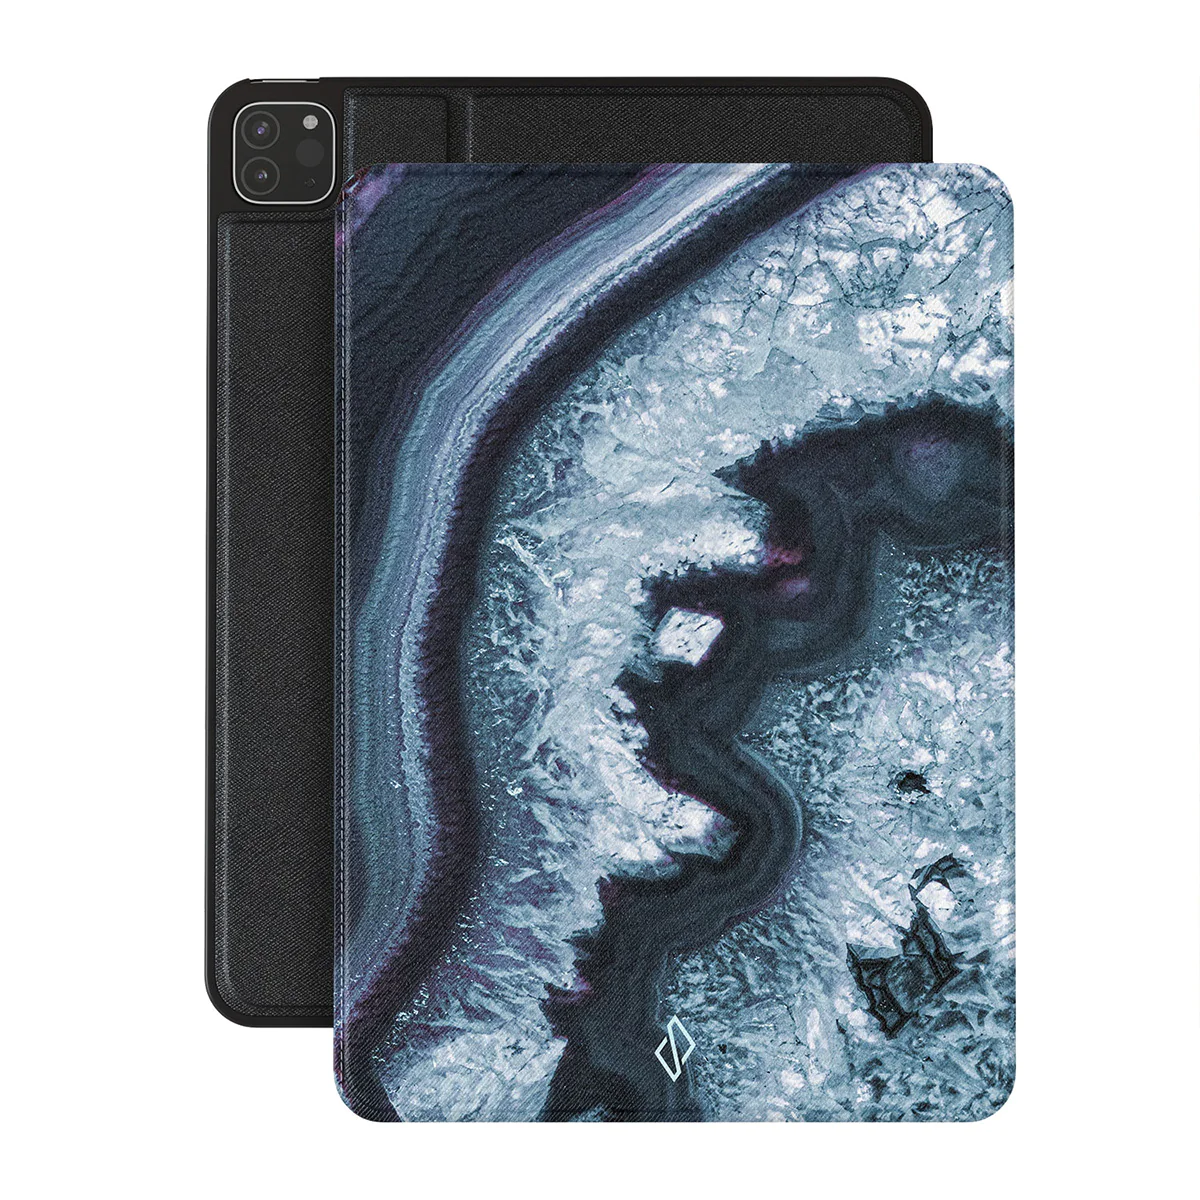 BURGA Frozen Lake Case for iPad